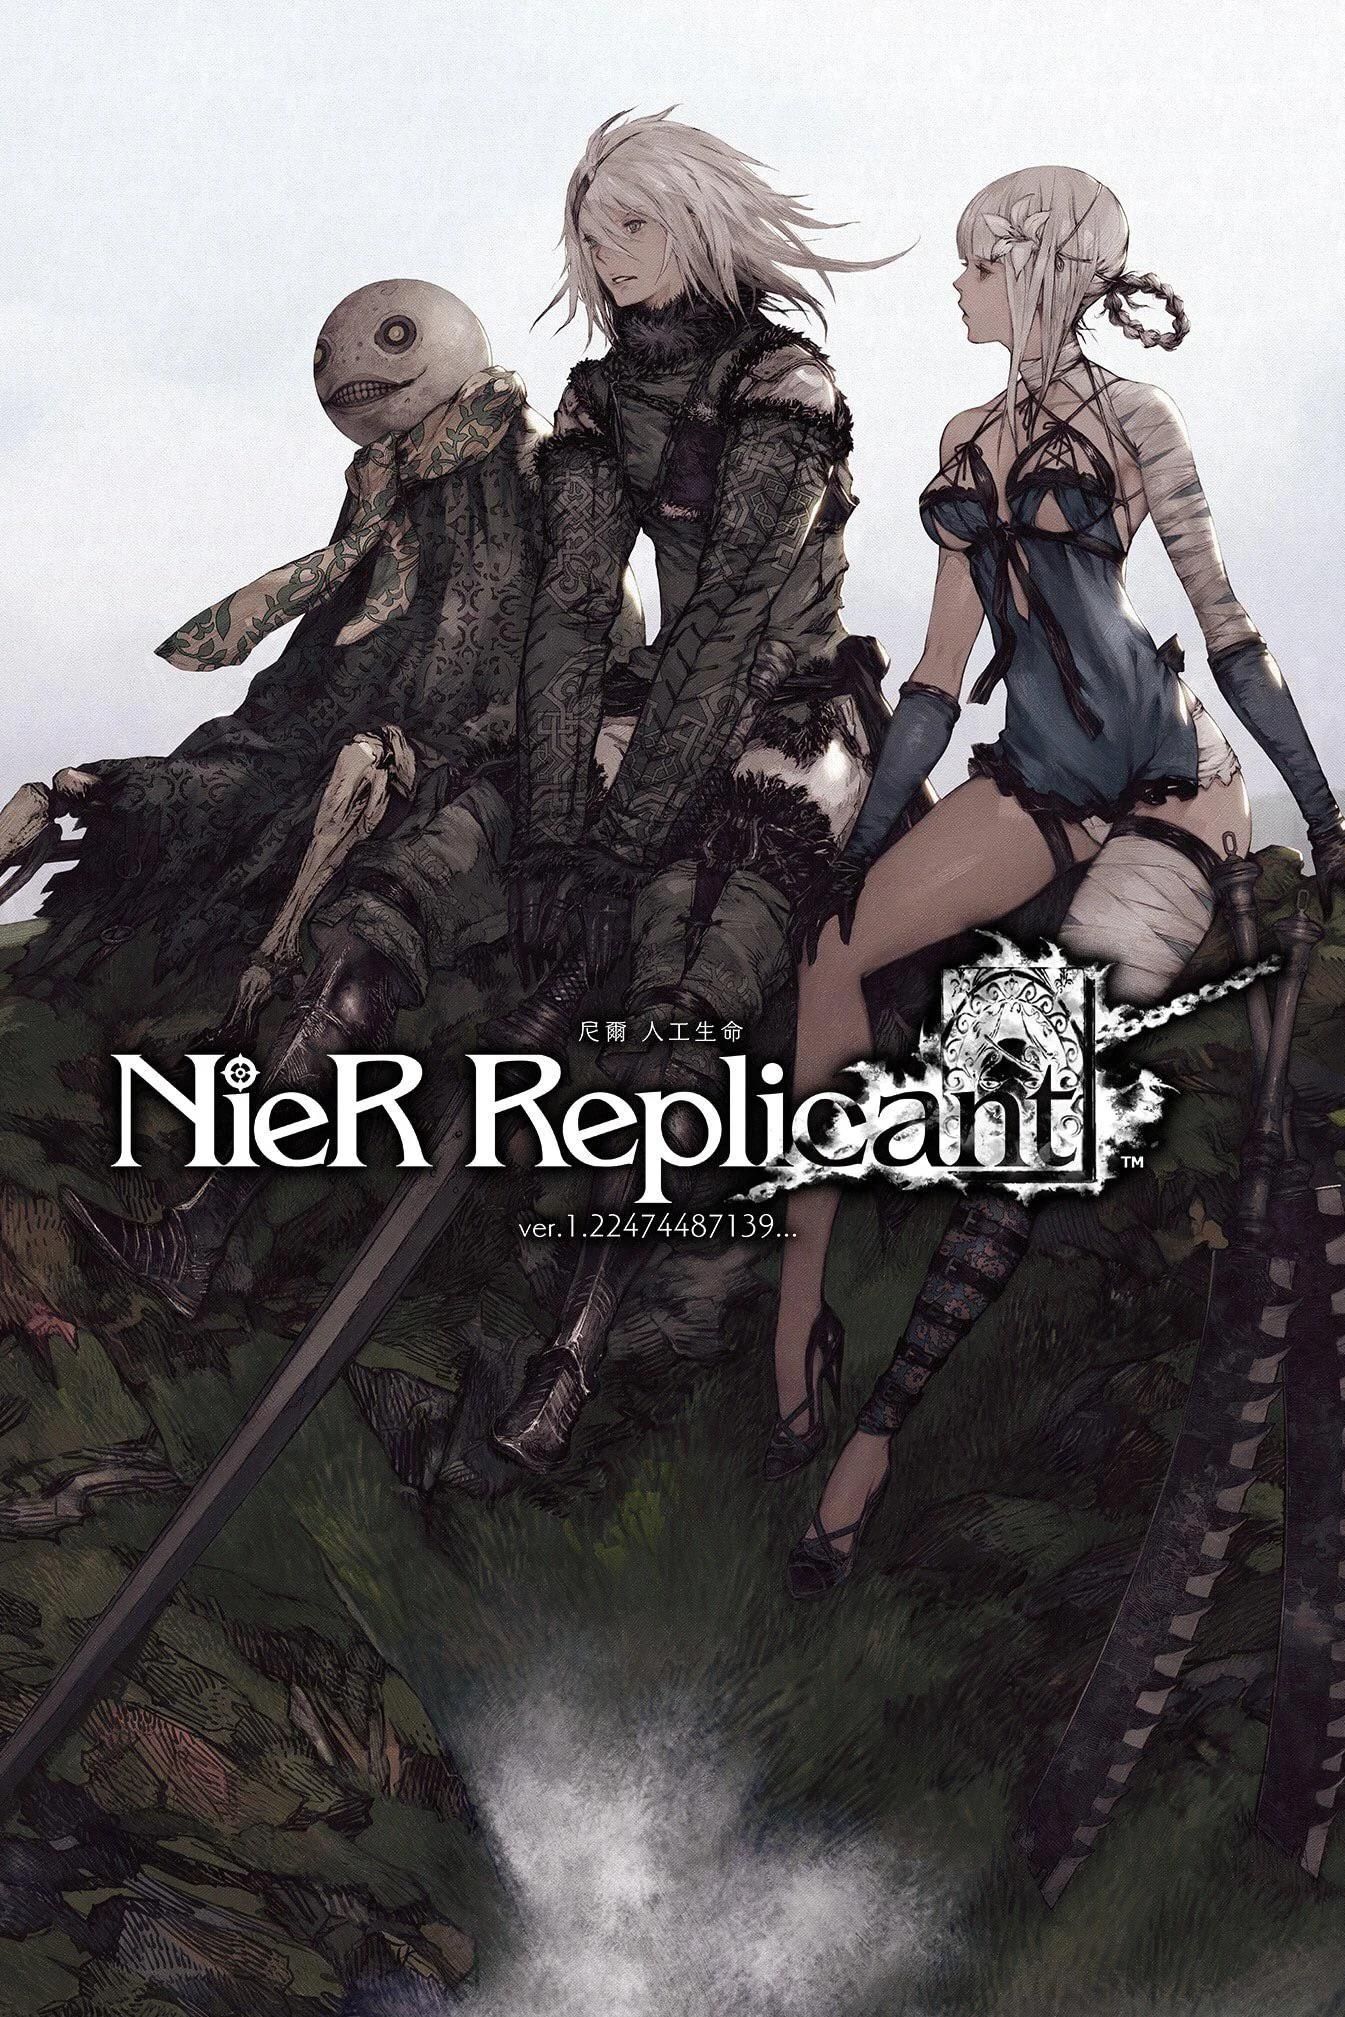 NieR Replicant Game Poster